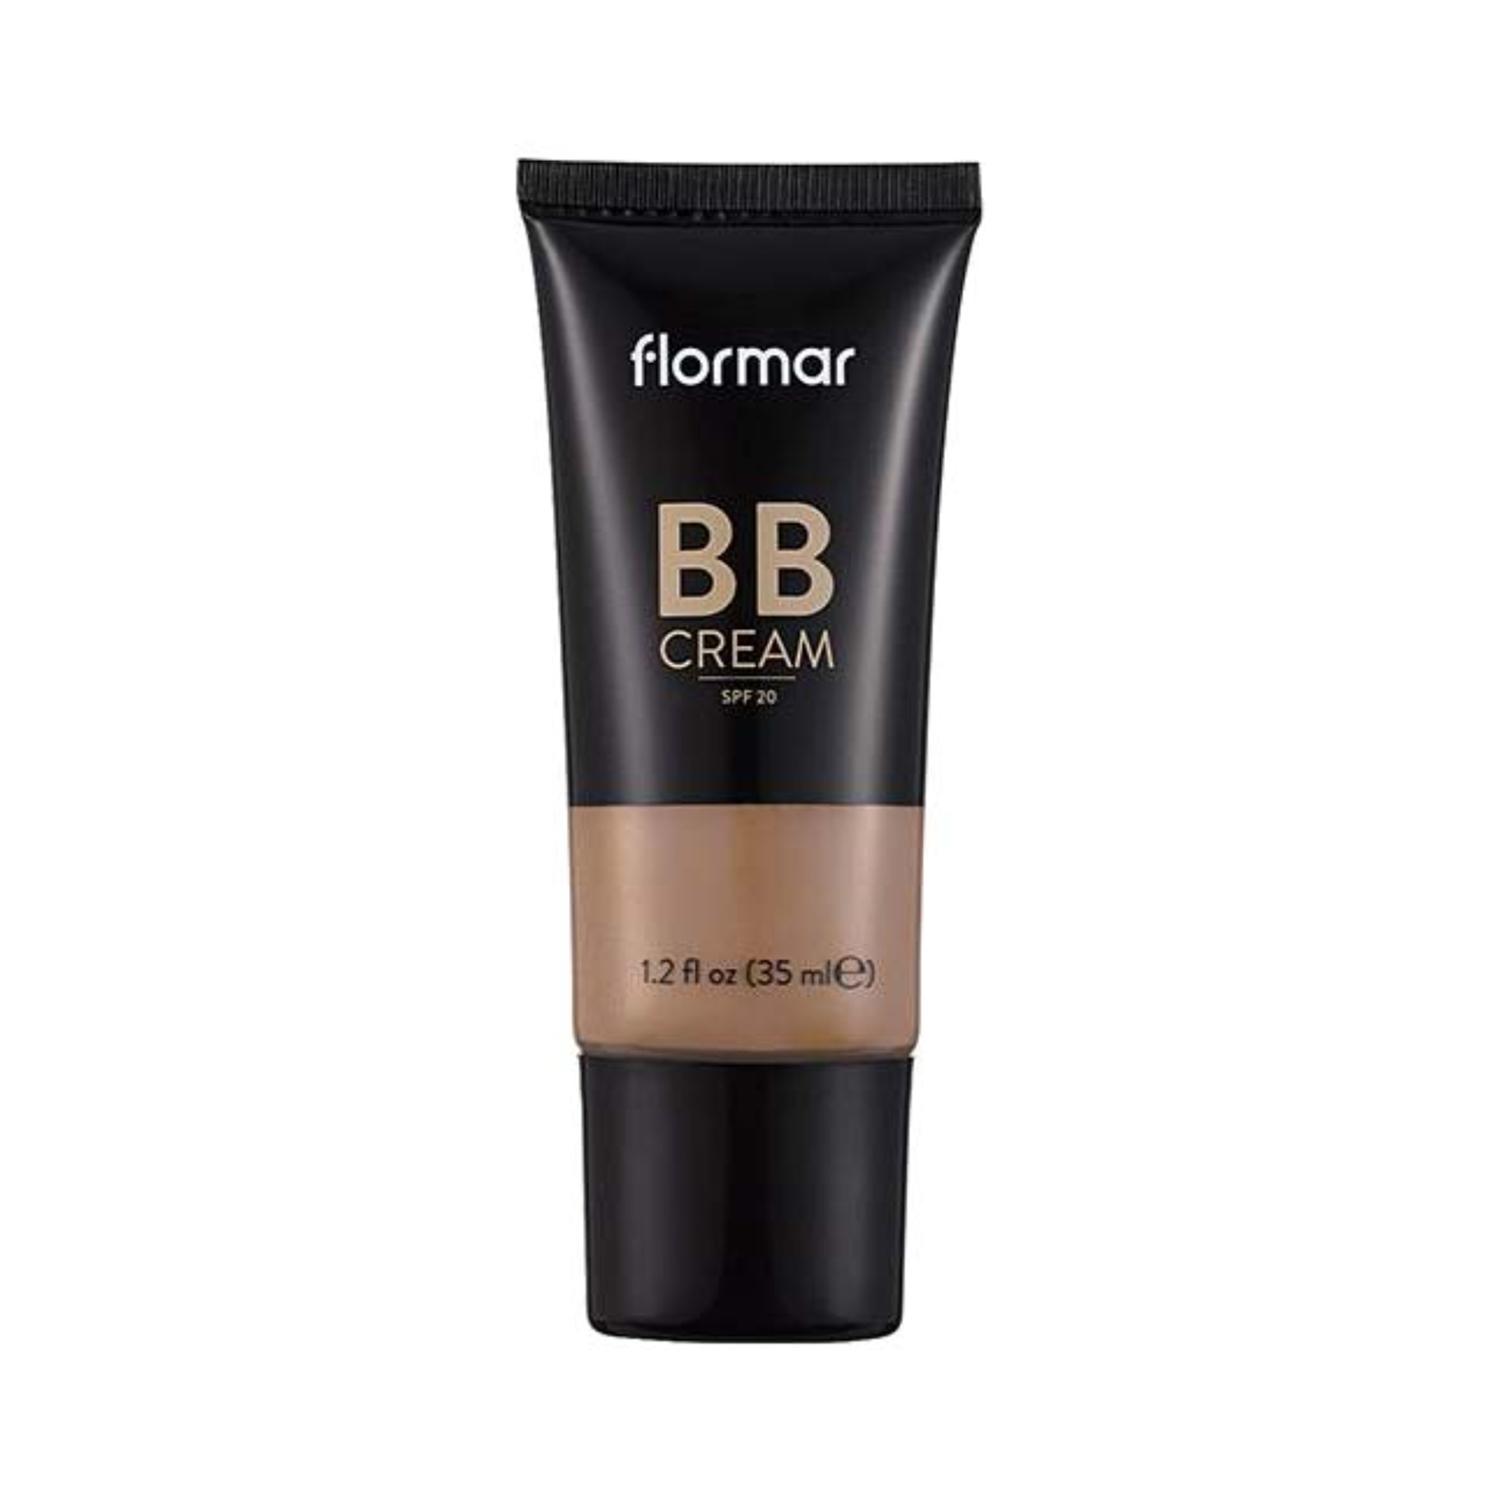 flormar bb cream - bb05 medium (35ml)